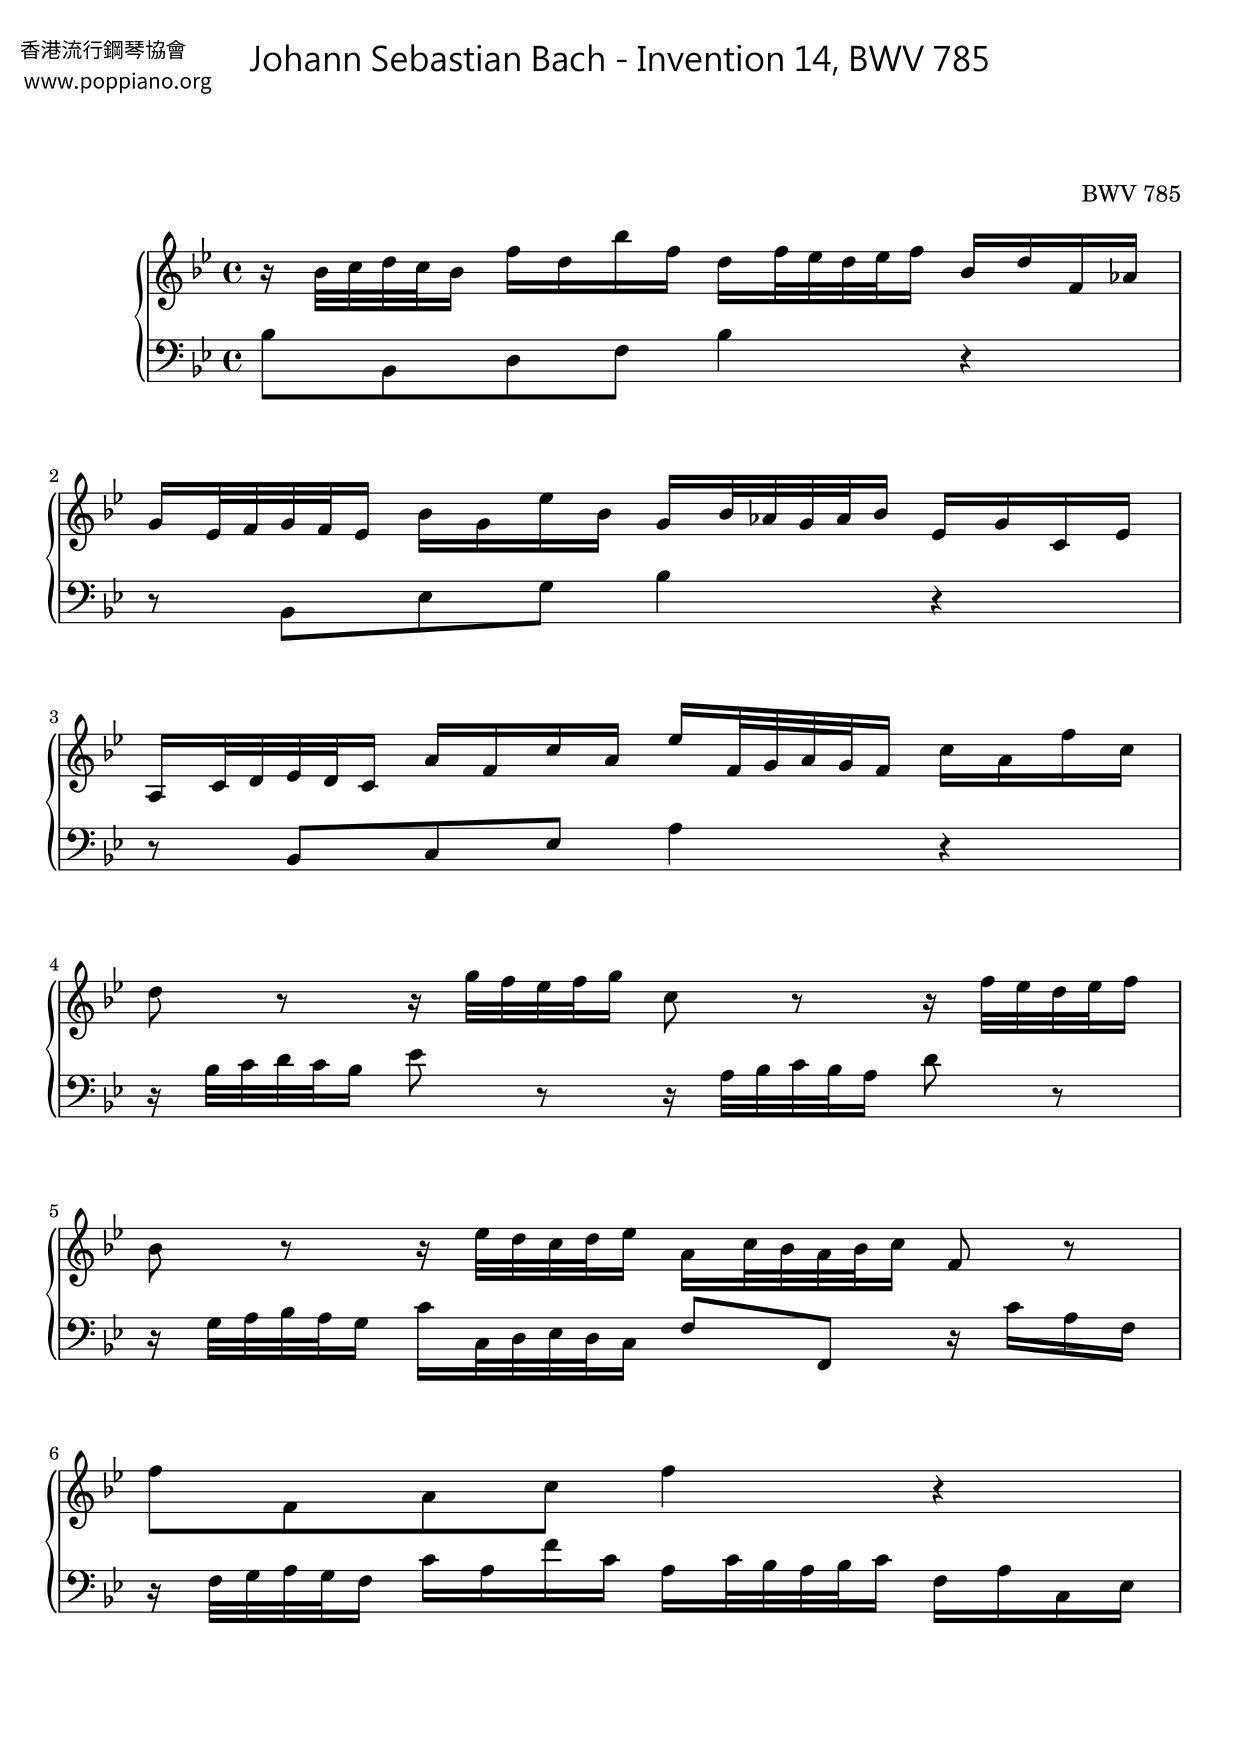 Invention 14, BWV 785 Score